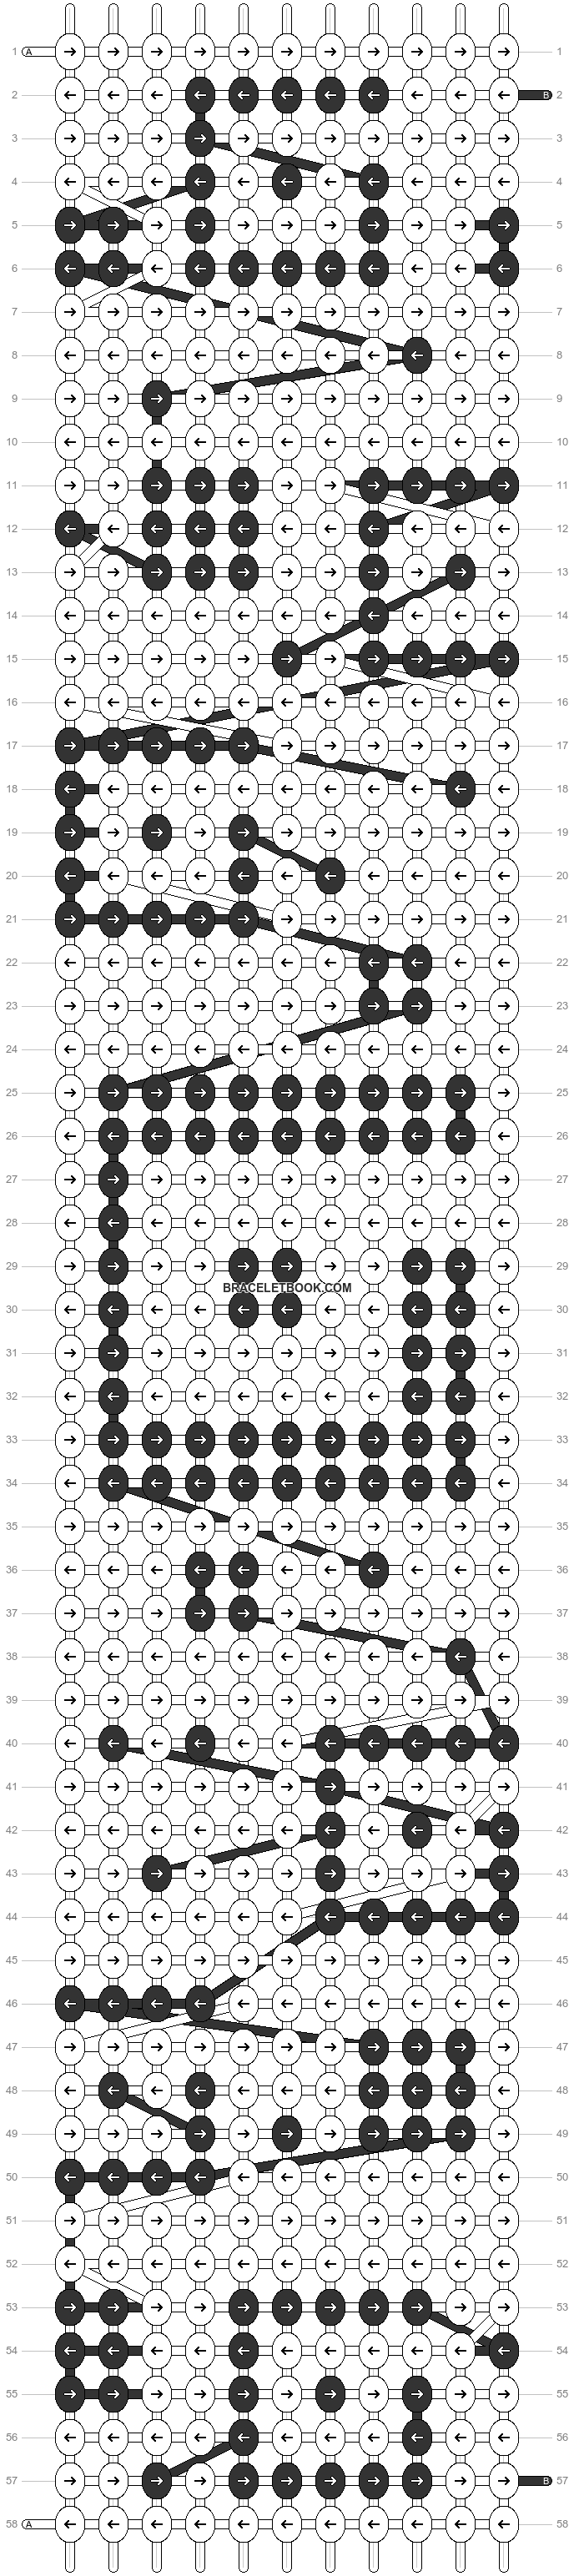 Alpha pattern #25146 variation #16016 pattern